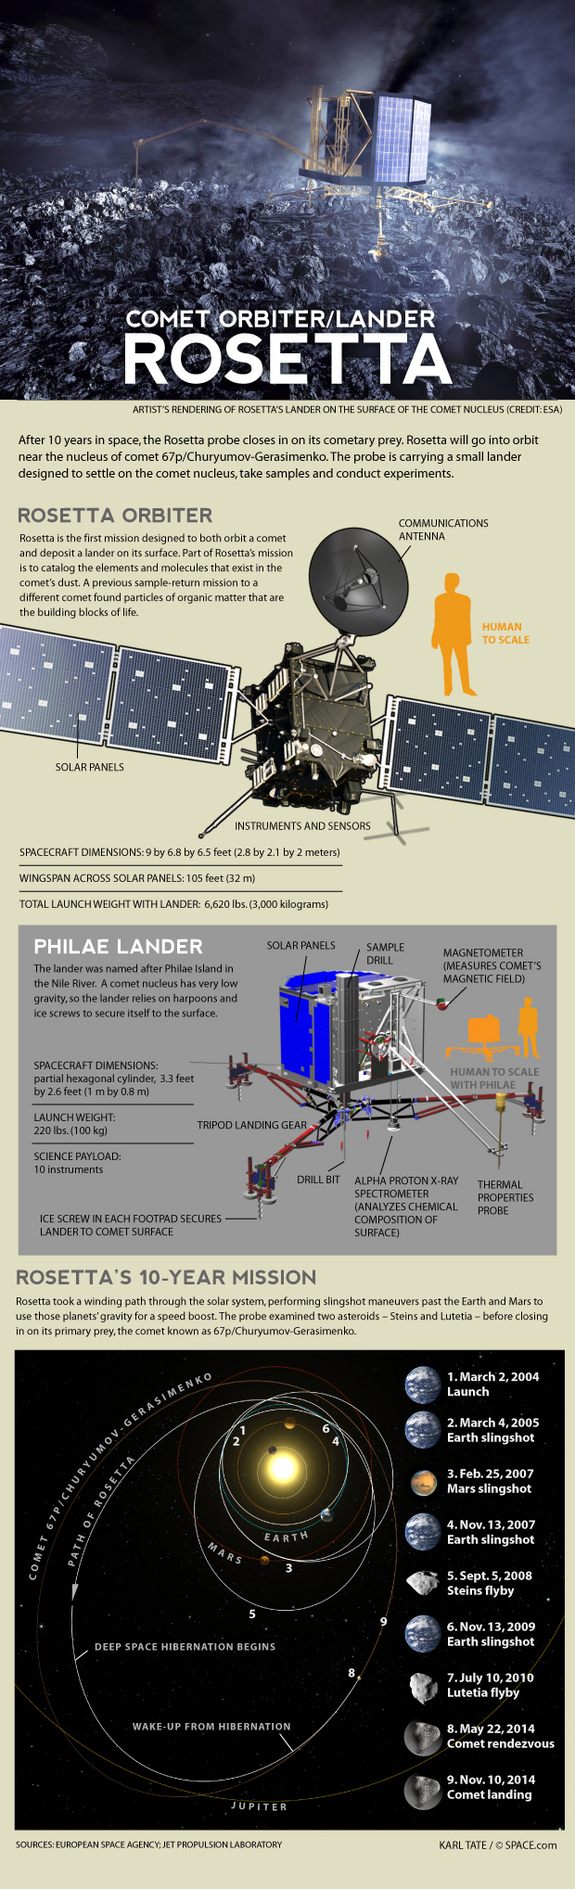 Rosetta spacecraft will orbit a comet and release a lander.